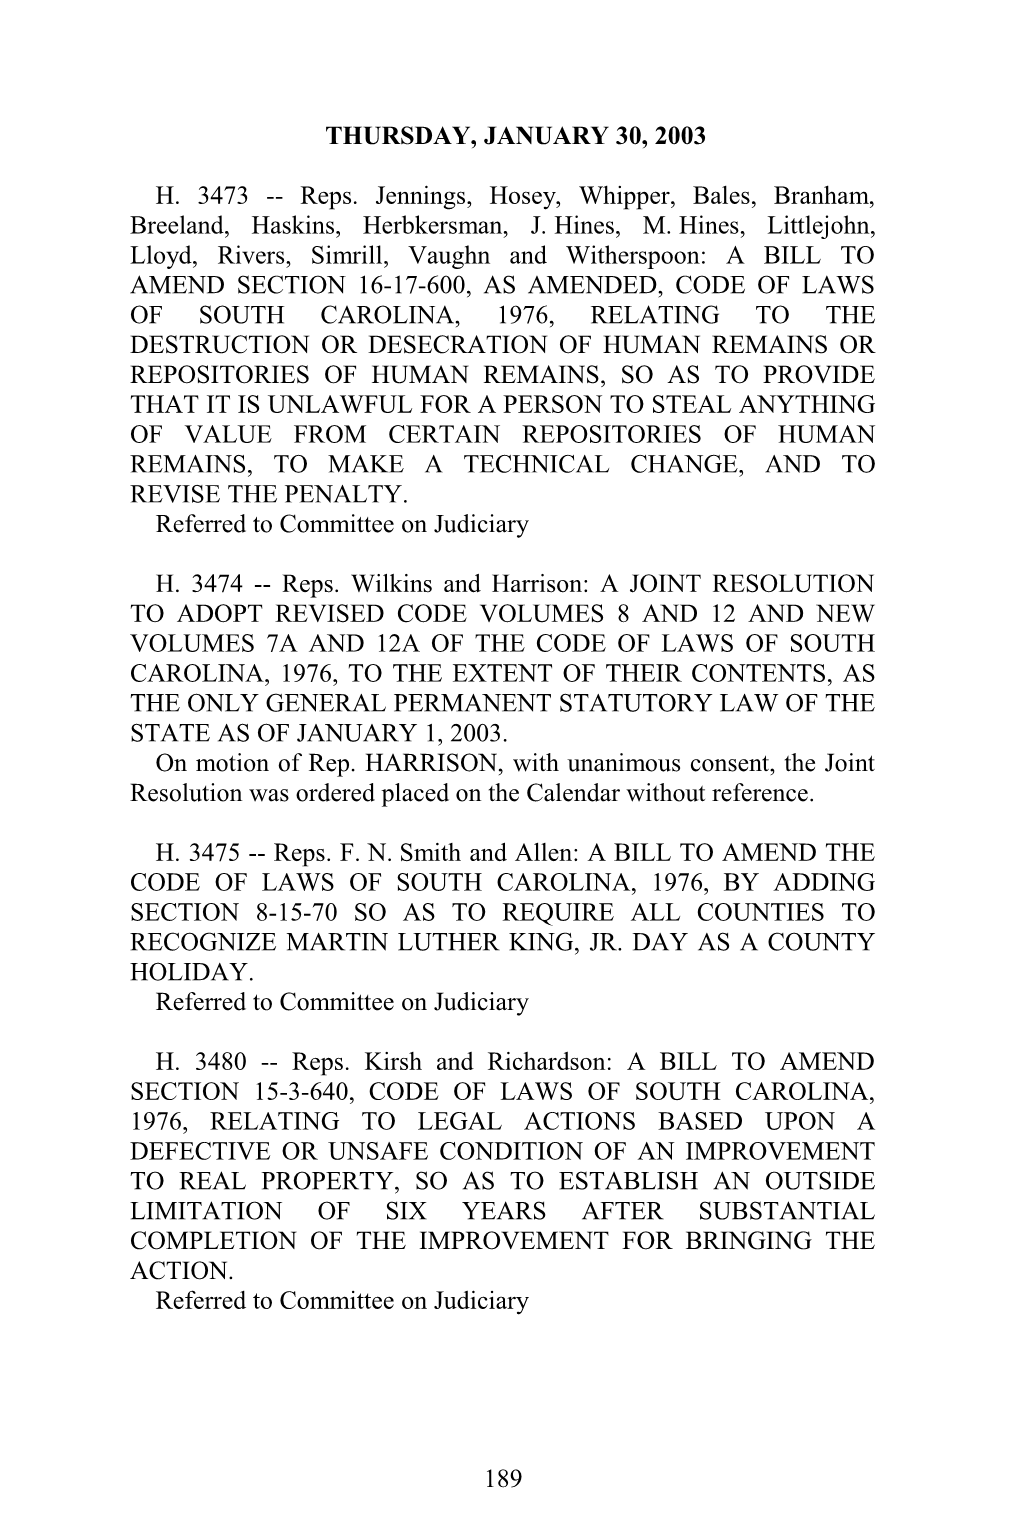 House Journal for Jan. 30, 2003 - South Carolina Legislature Online